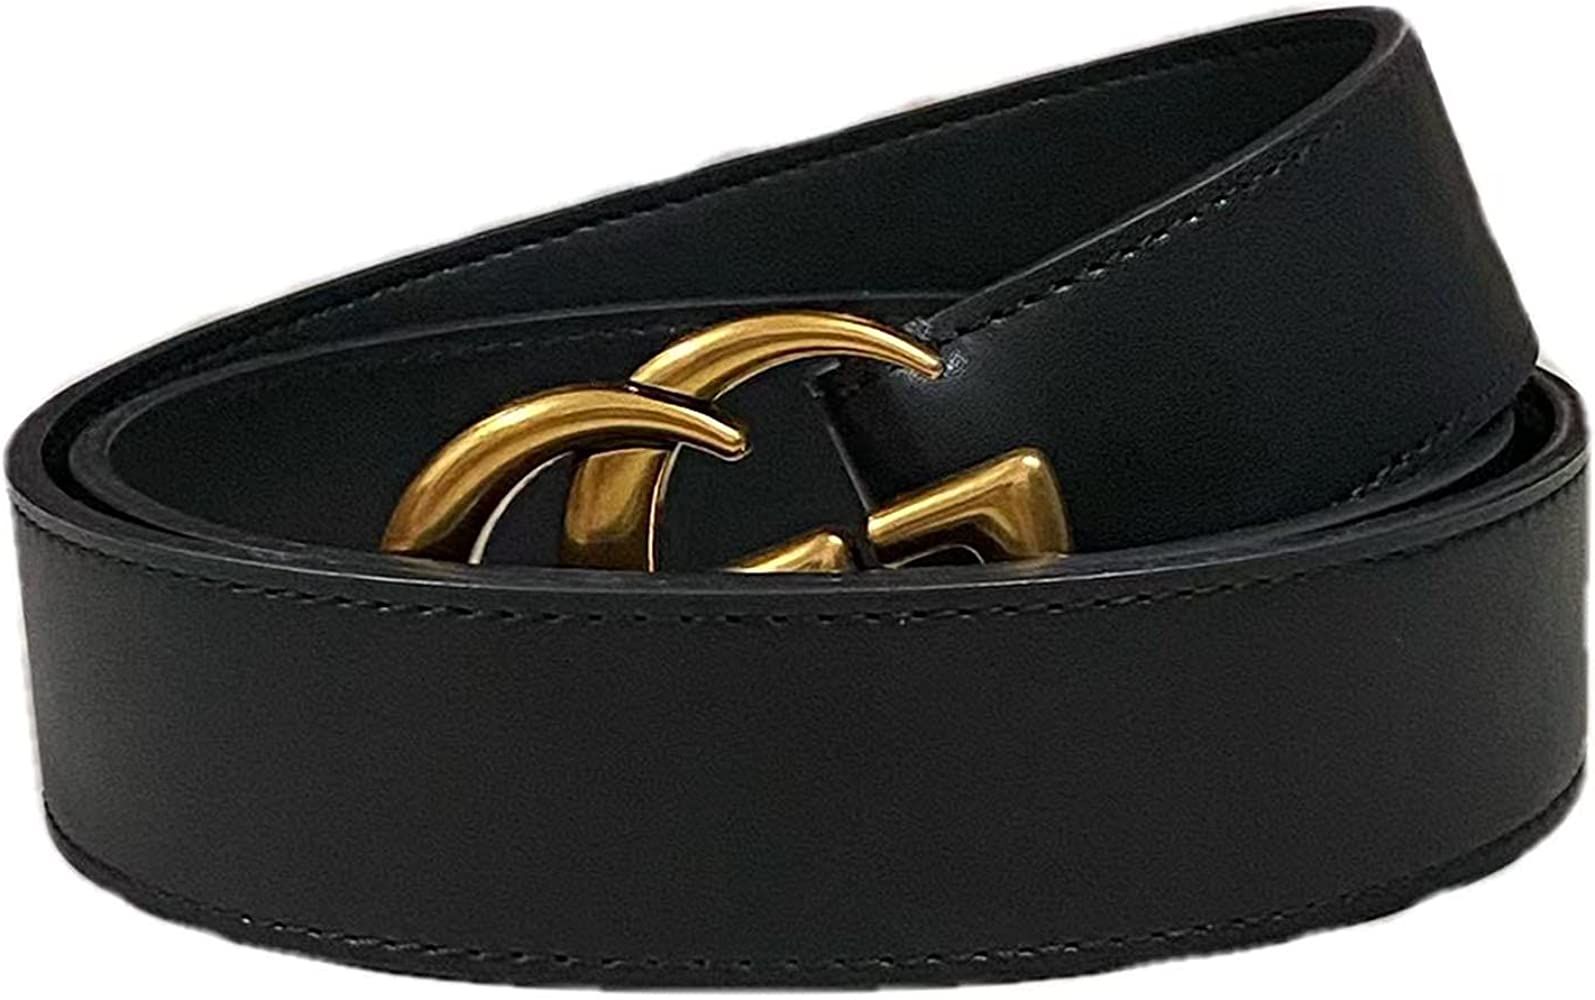 Black classic fashion casual business ladies belt women's belts | Amazon (US)